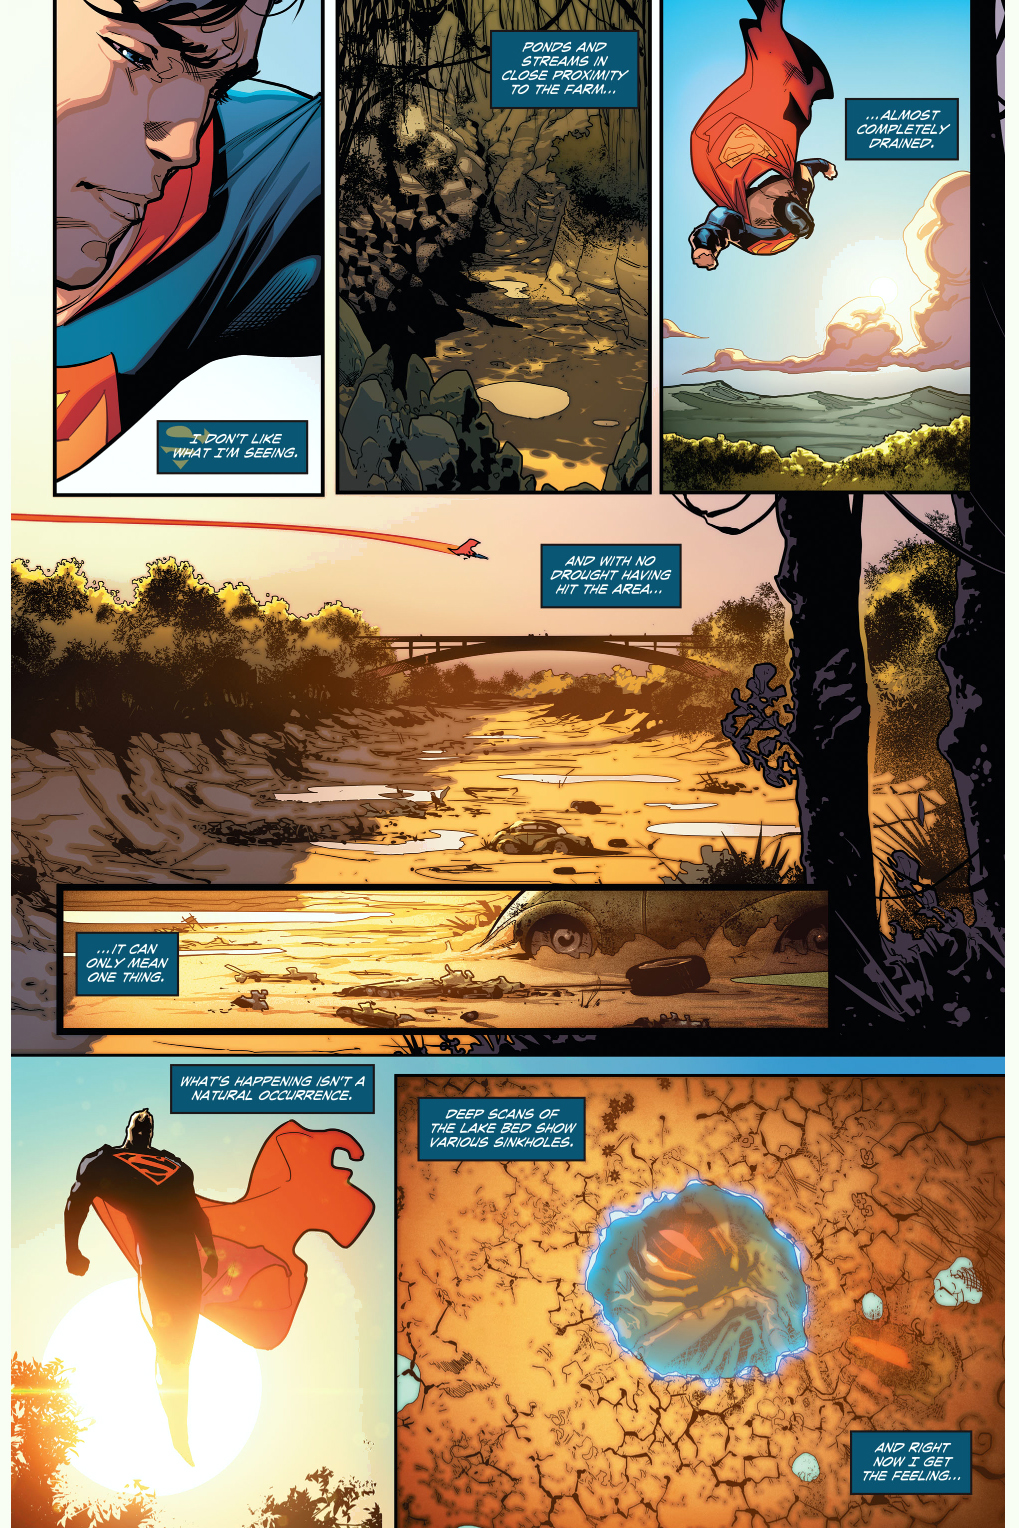 Superman Meets Swamp Thing (Rebirth)